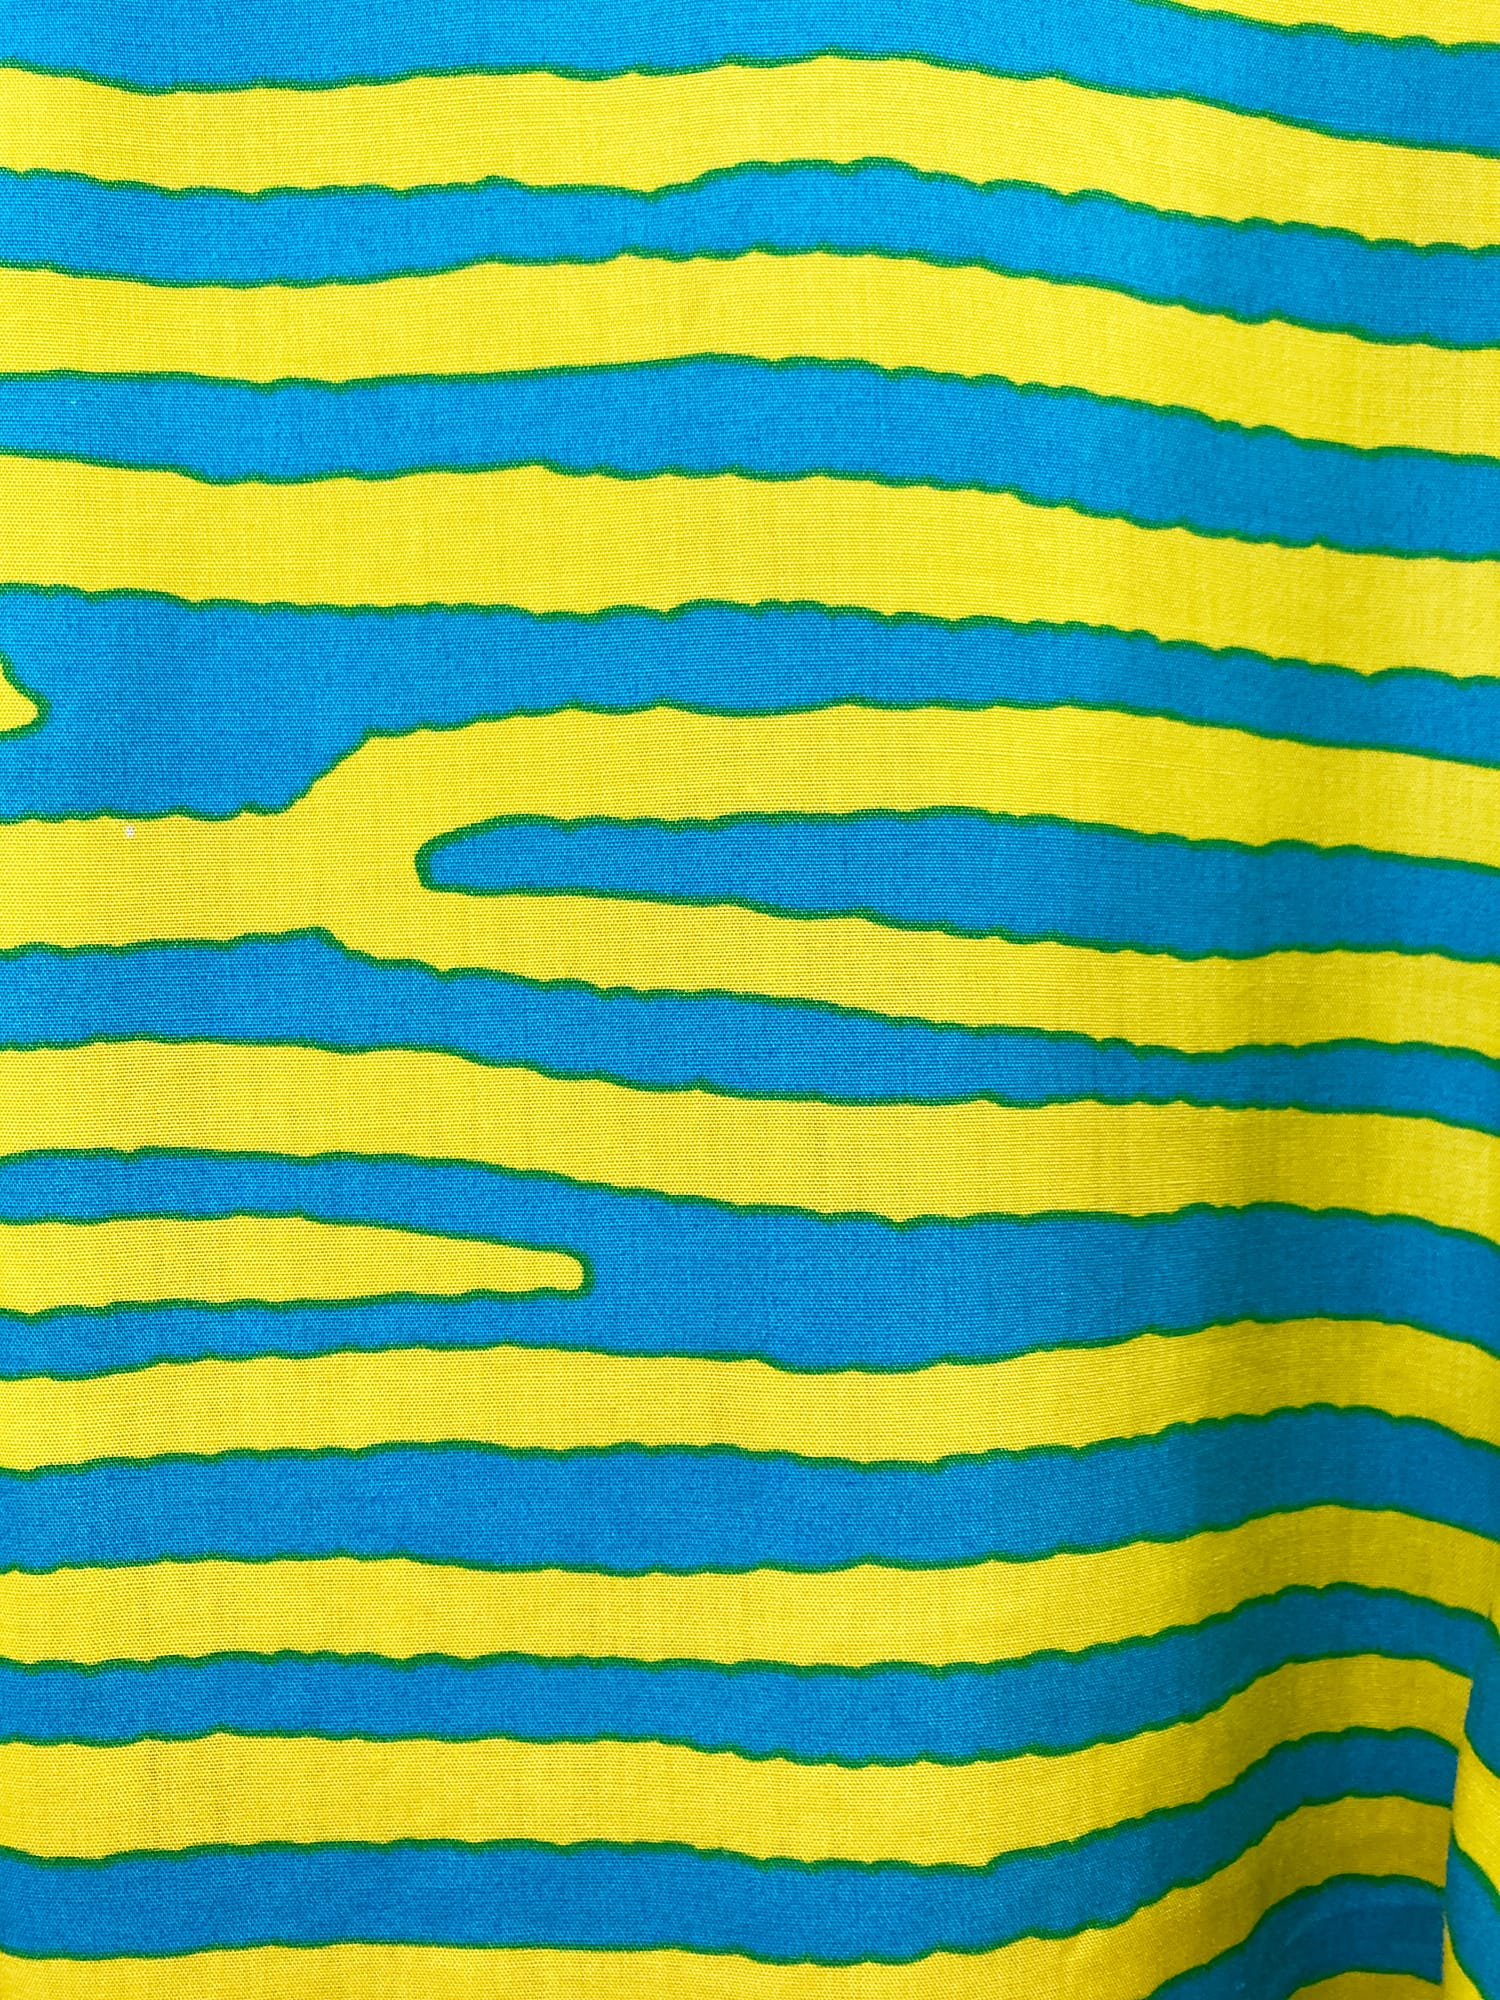 Kenzo 1980s blue yellow zebra stripe queen angel fish print short sleeve shirt